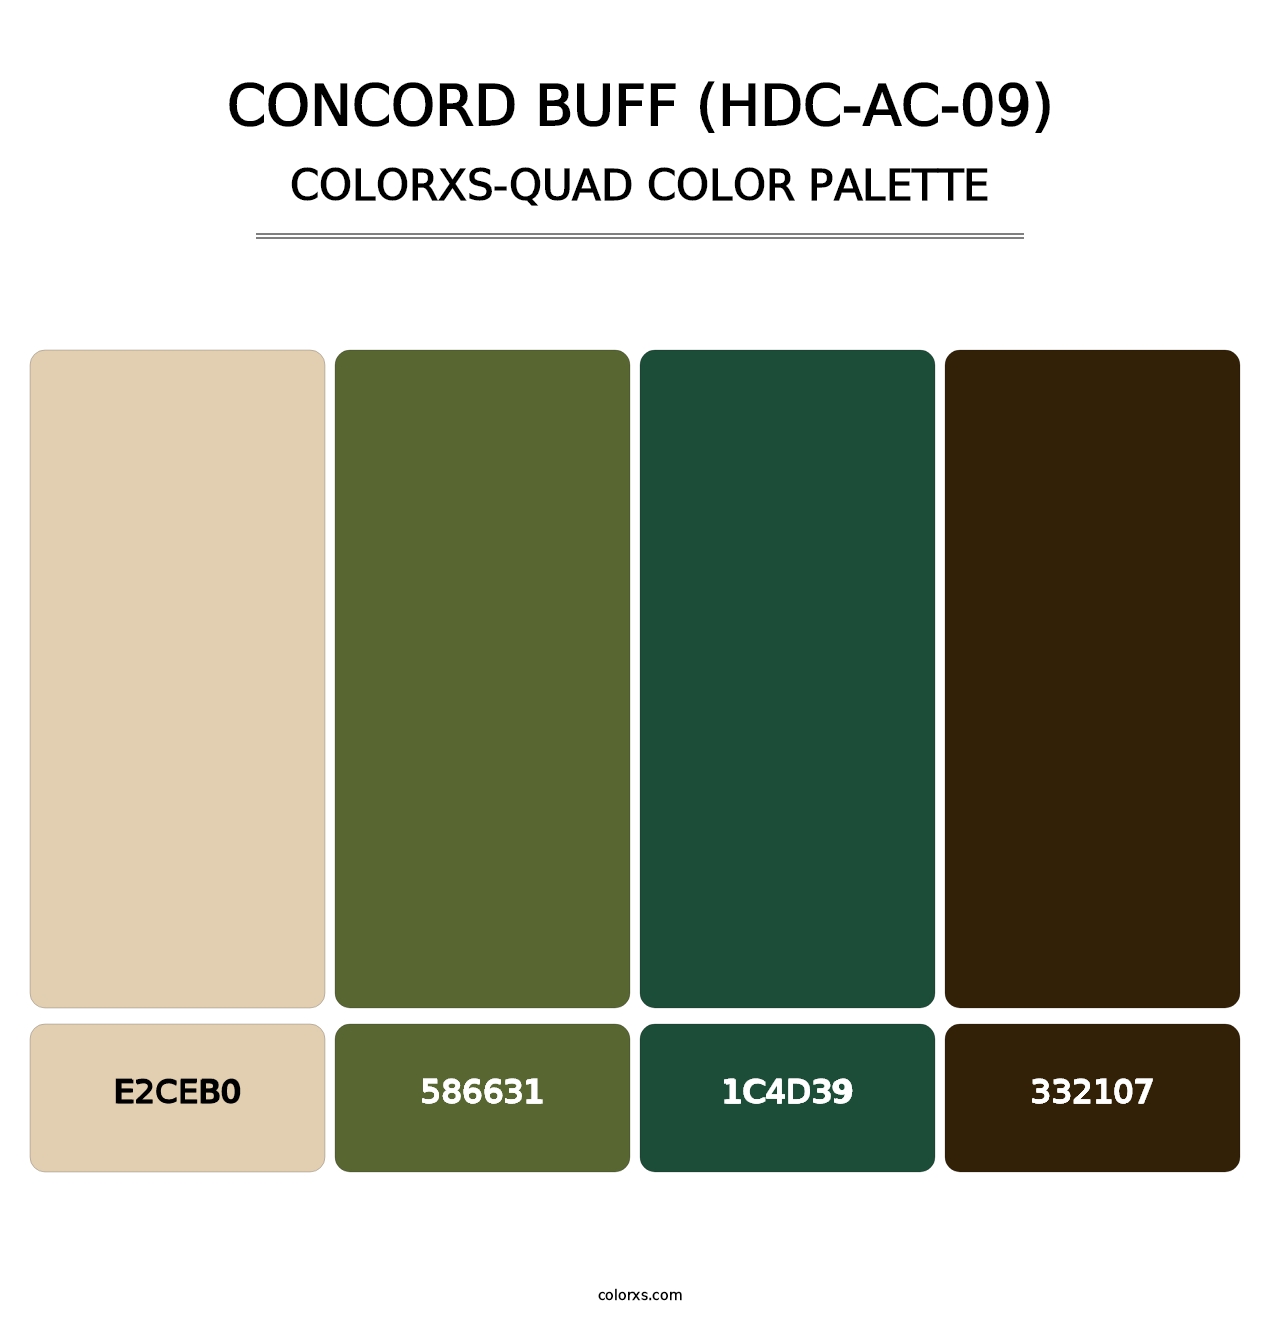 Concord Buff (HDC-AC-09) - Colorxs Quad Palette